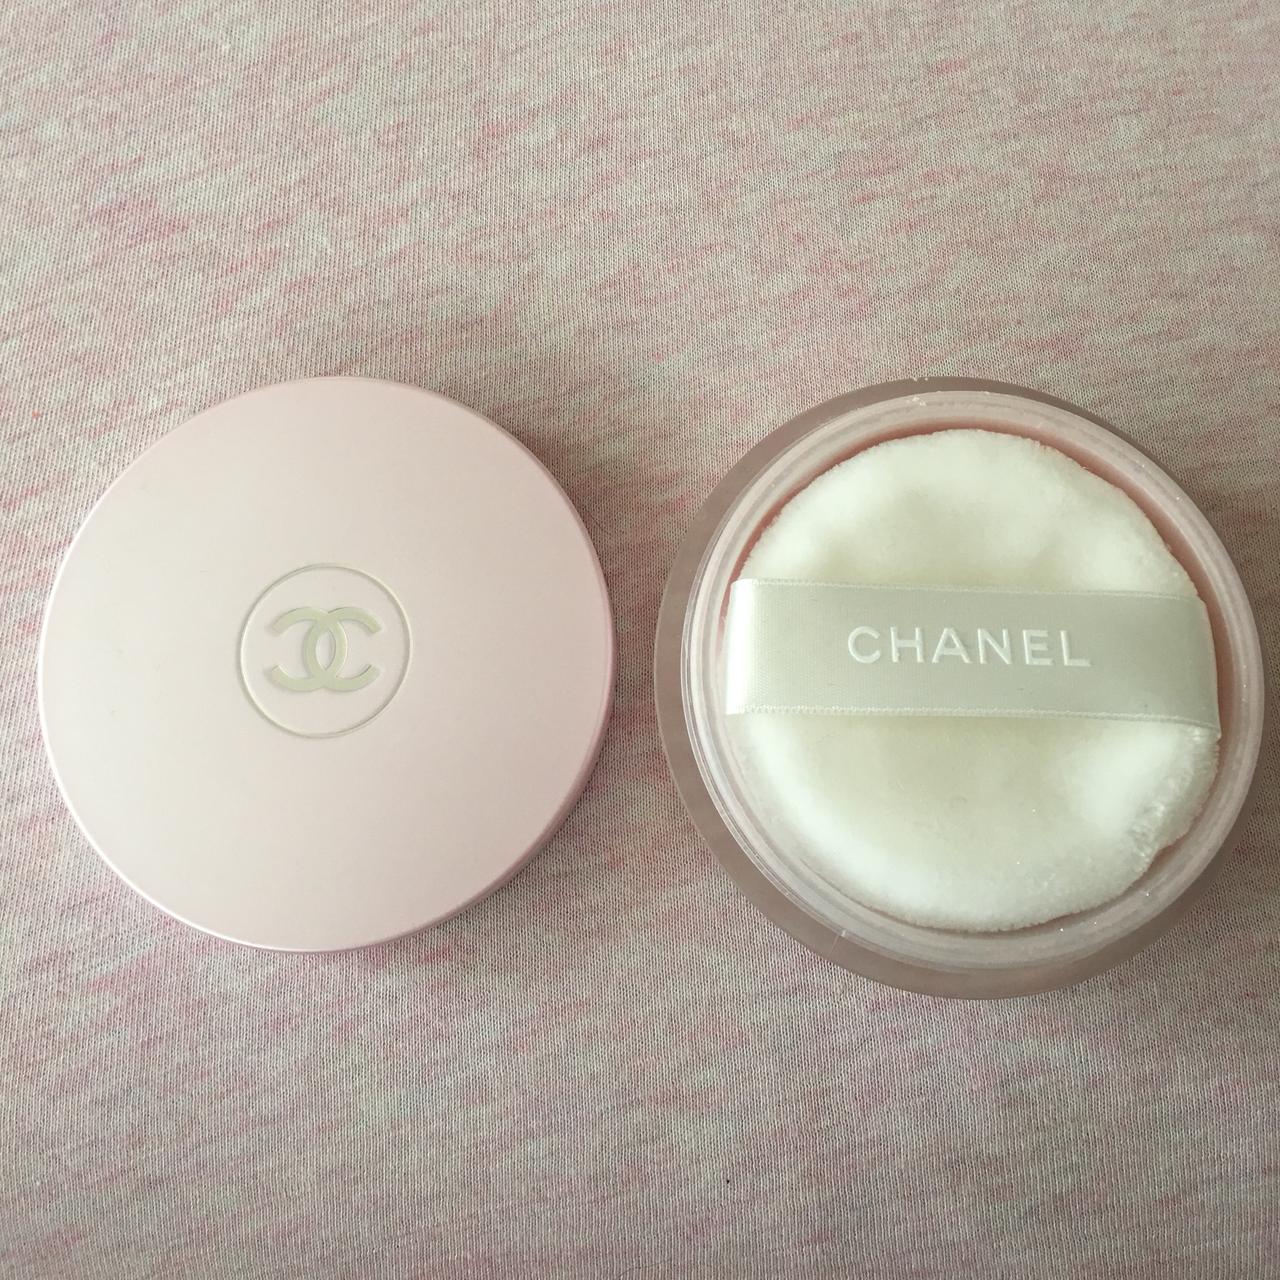 Chanel mascara, crème, and Chance perfume sample box - Depop